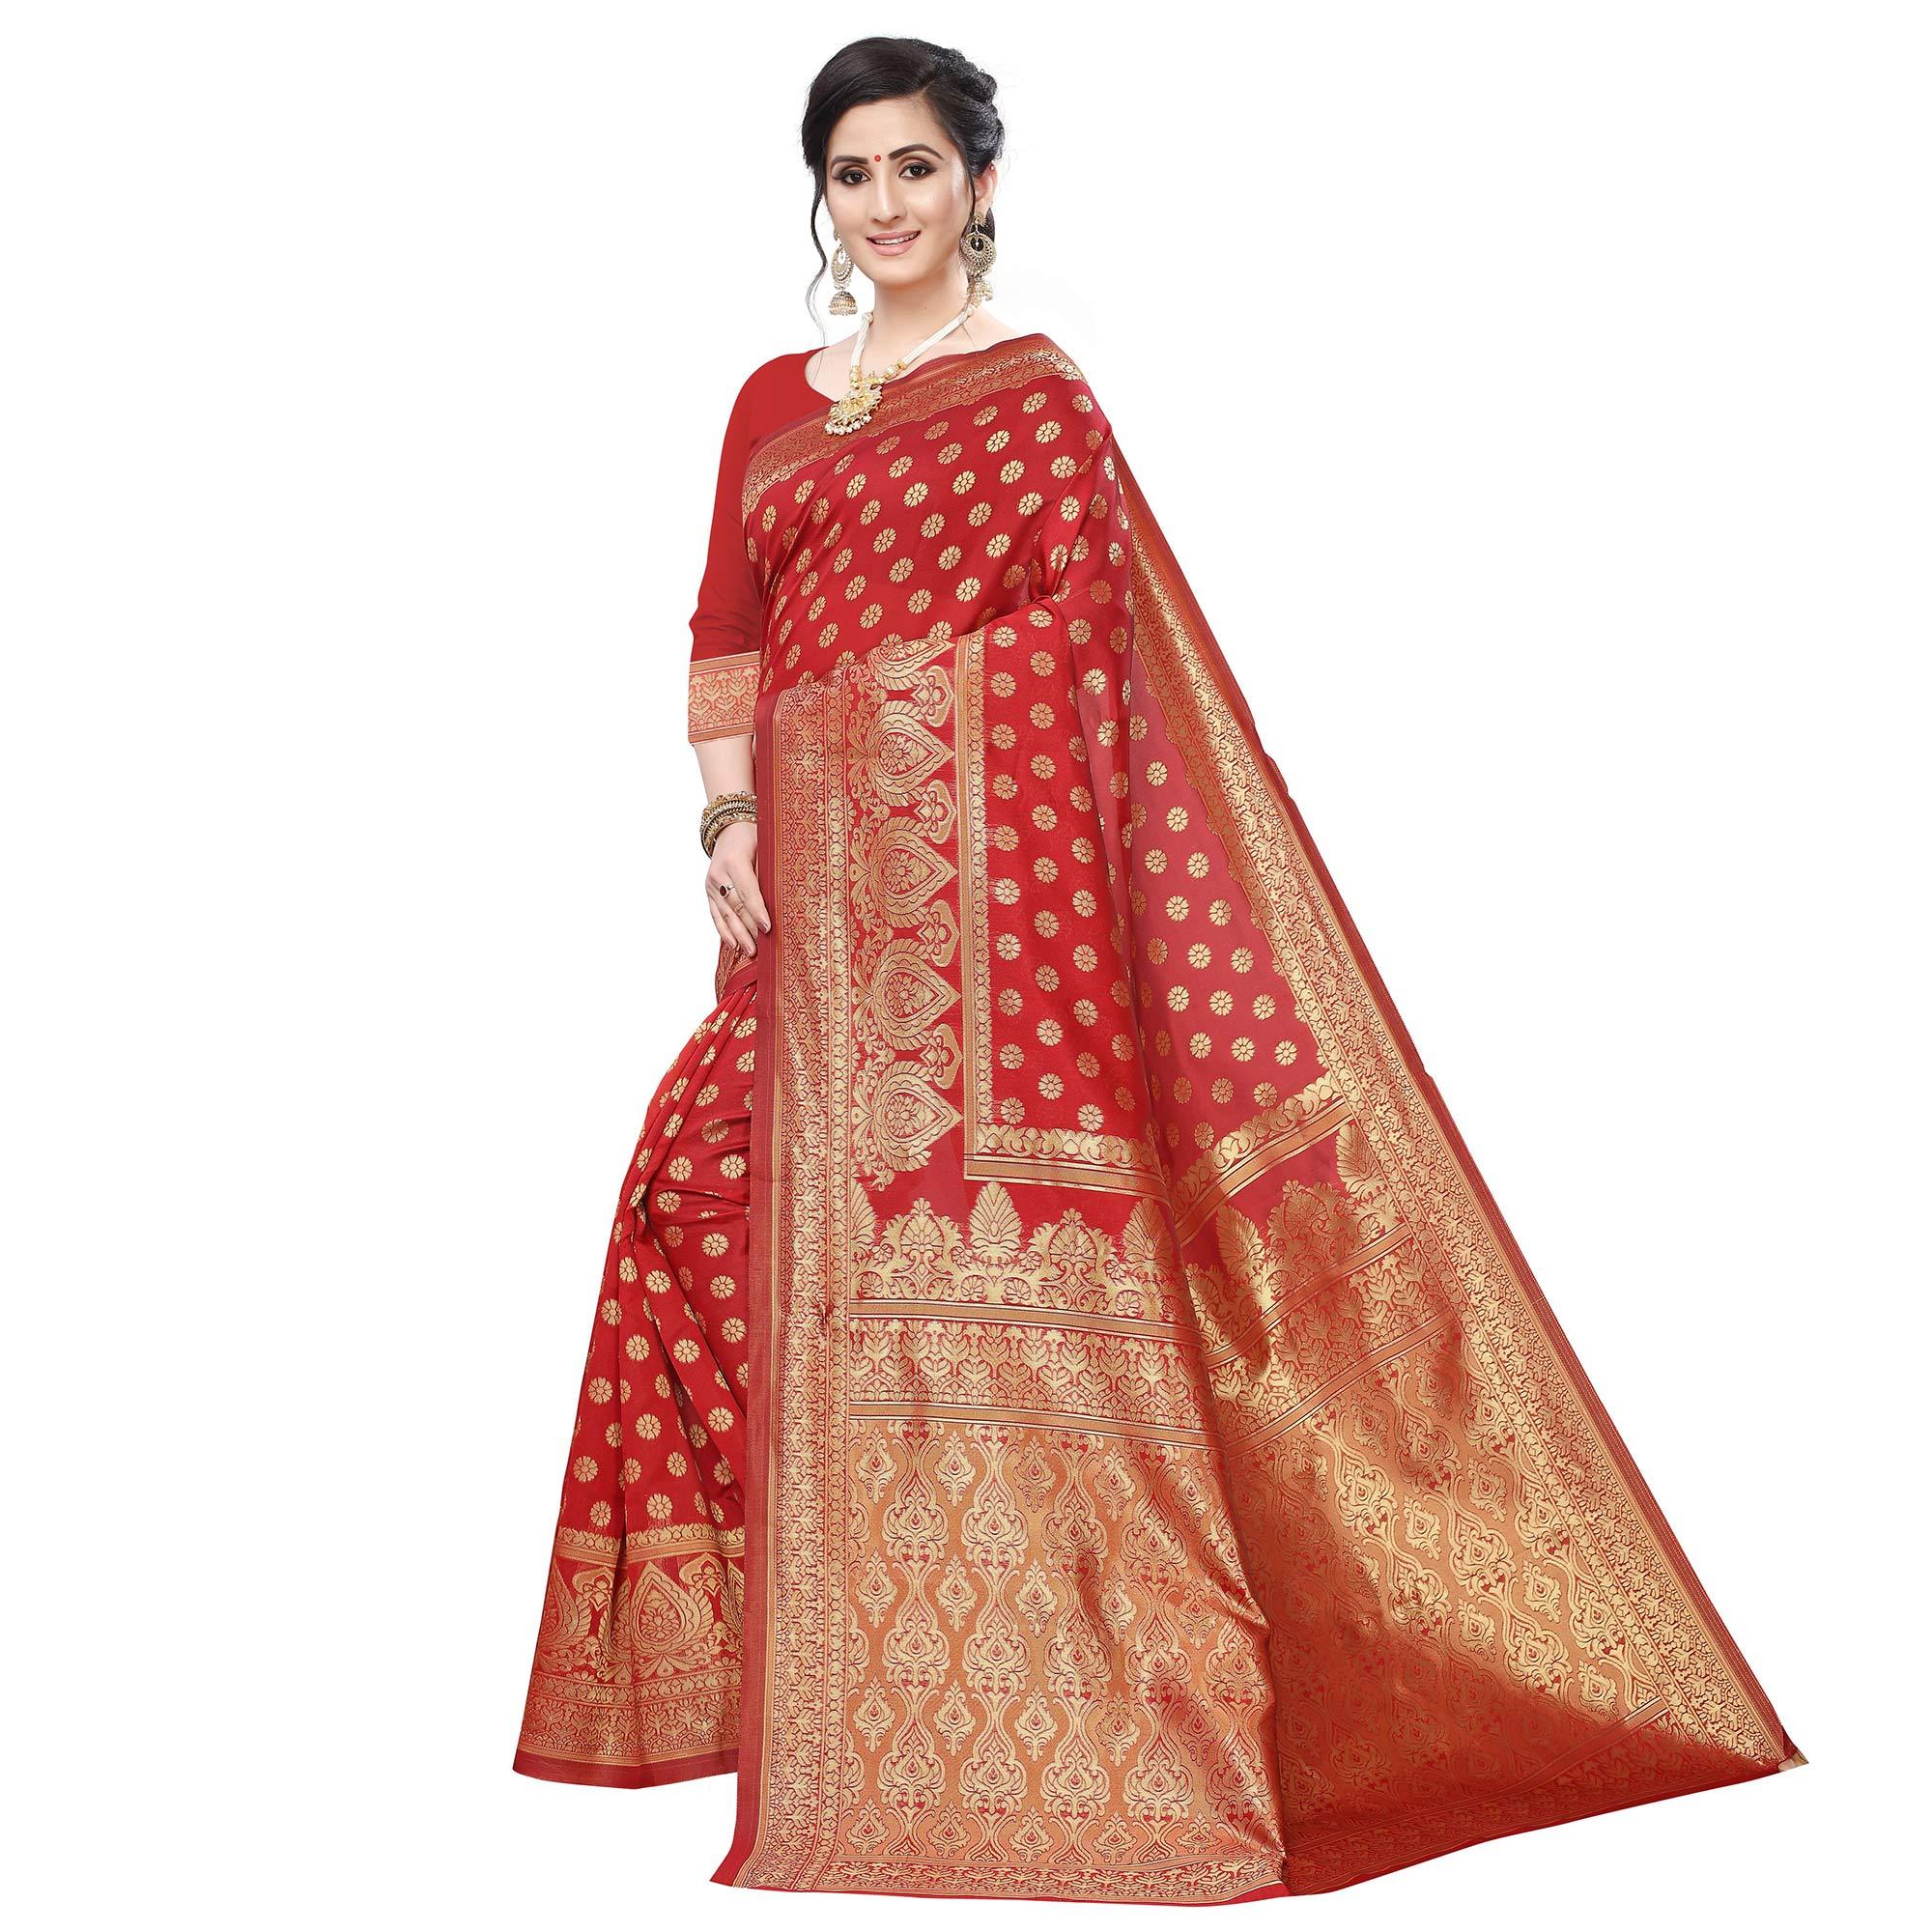 Sensational Red Colored Festive Wear Woven Art Silk Saree - Peachmode